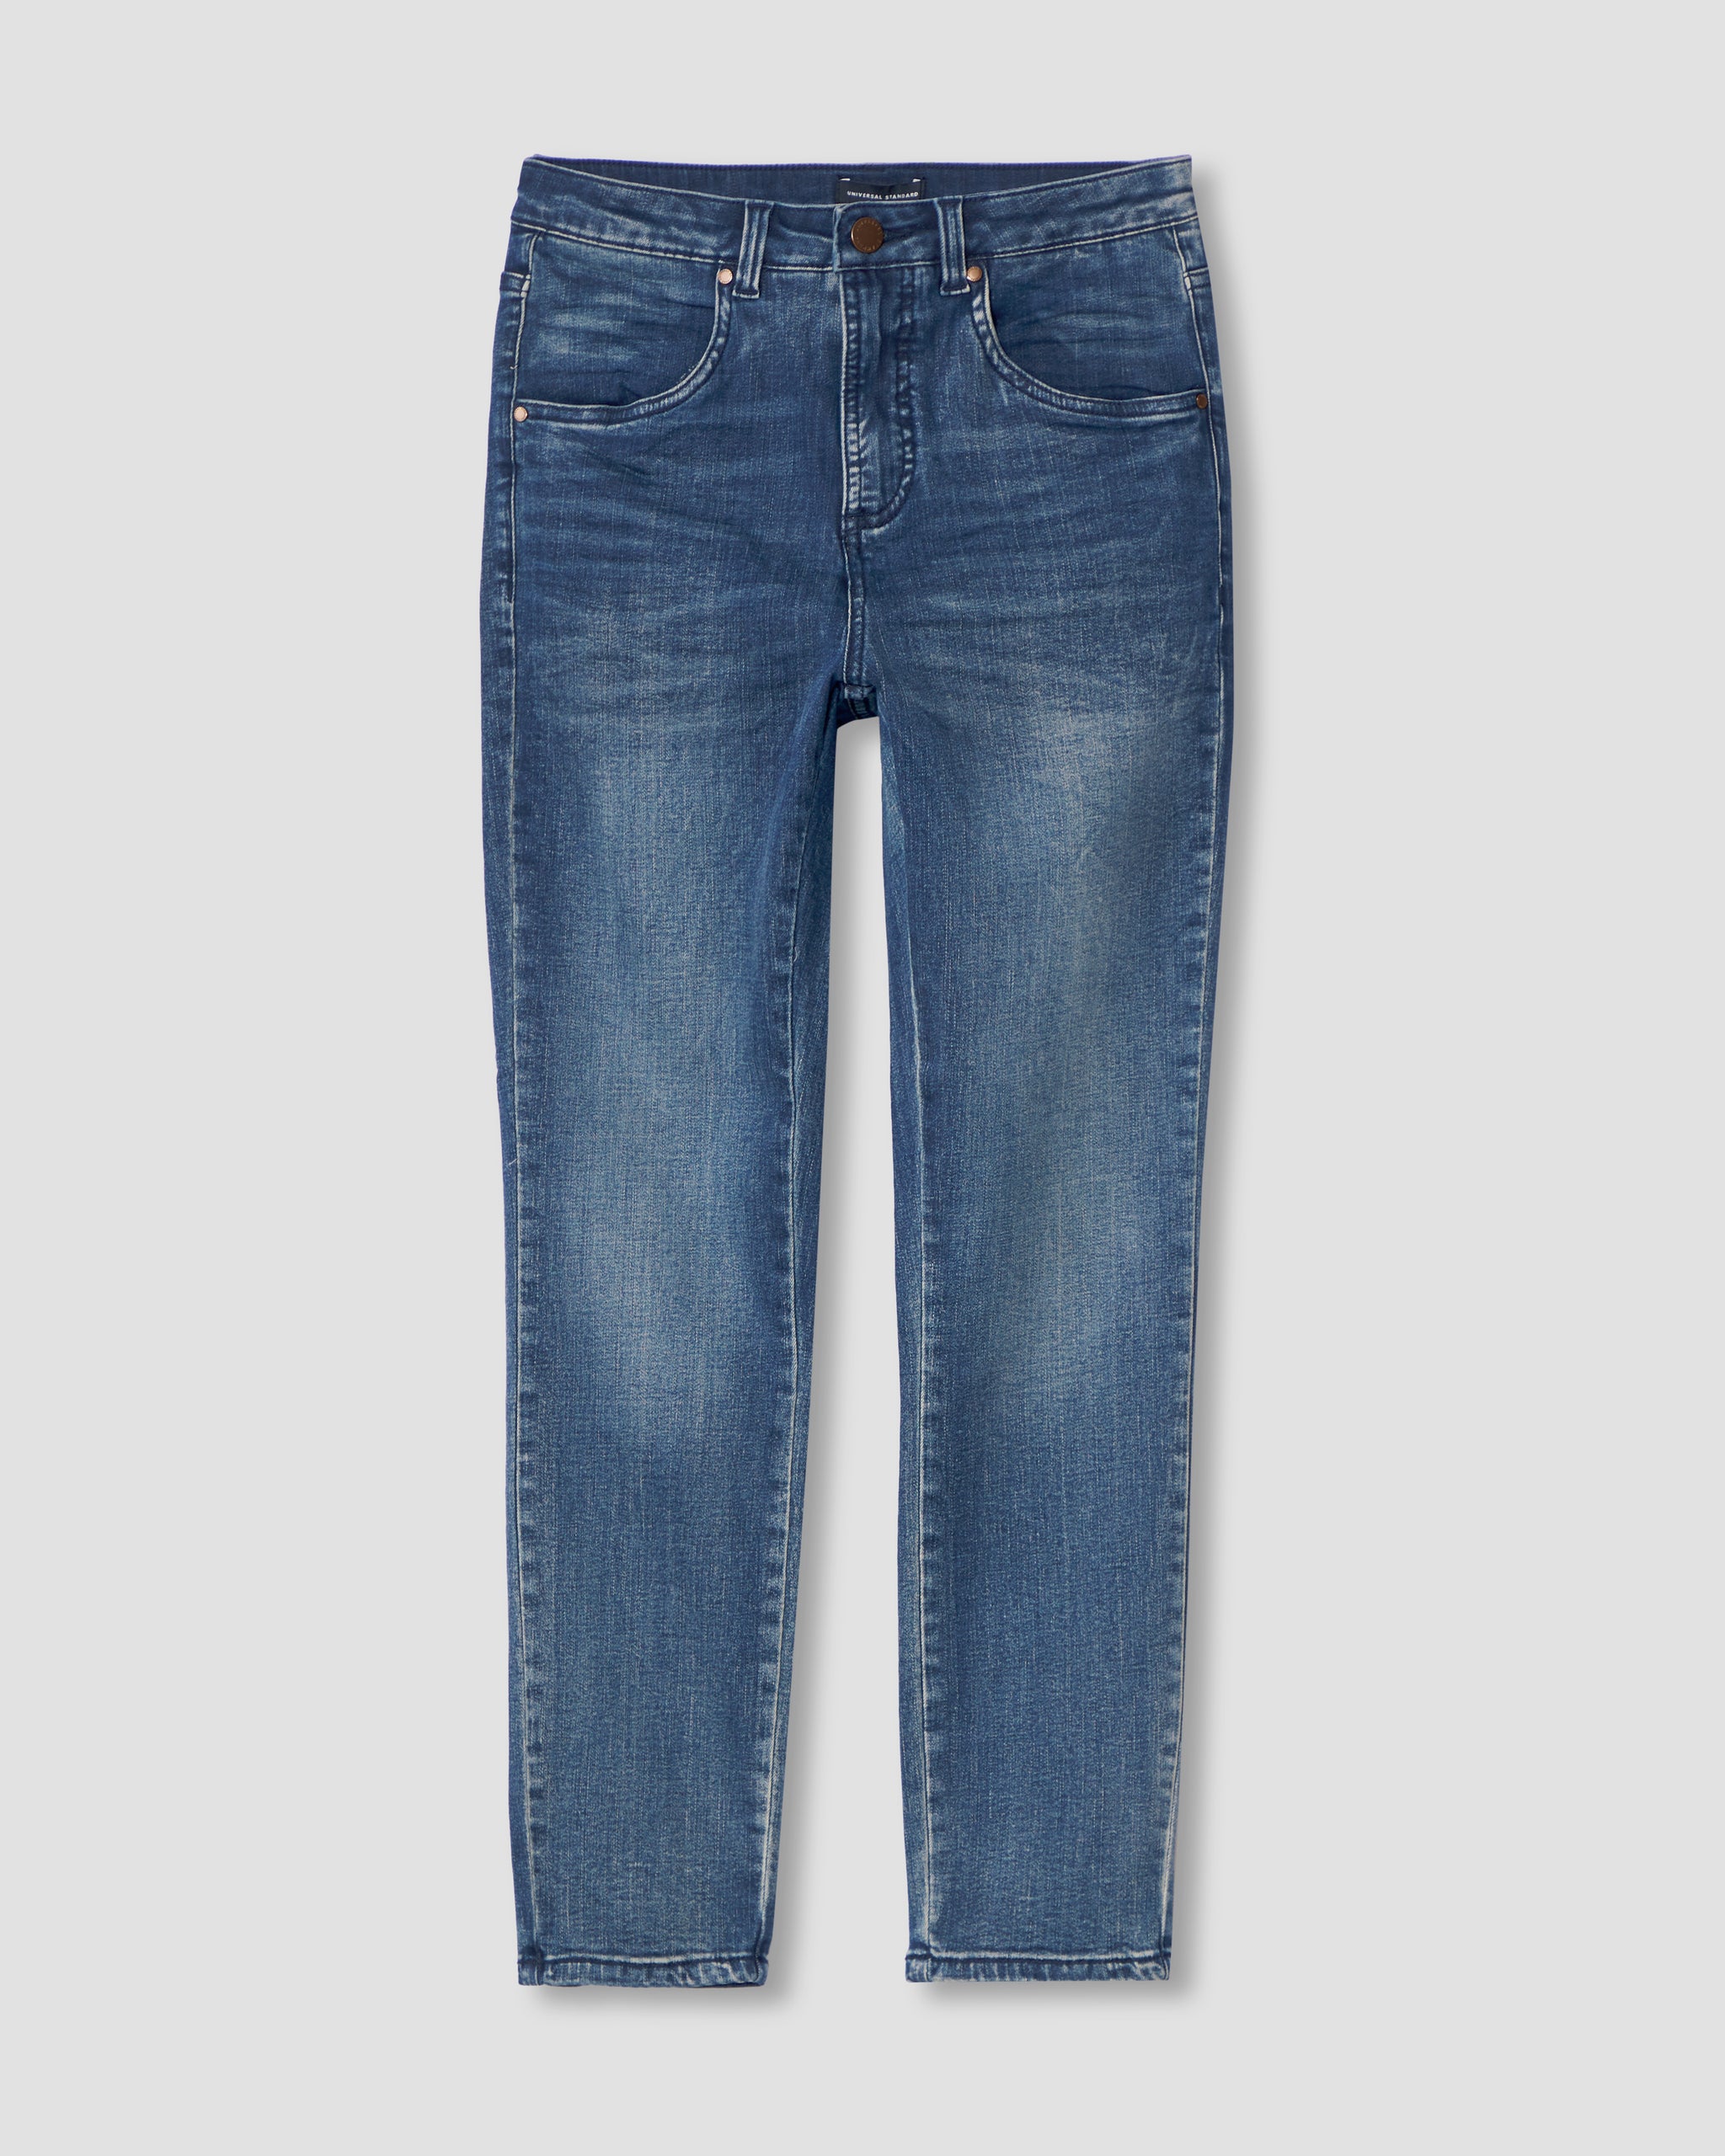 Anoniem Ass bloemblad Seine High Rise Skinny Jeans 27 Inch - Distressed Blue | Universal Standard